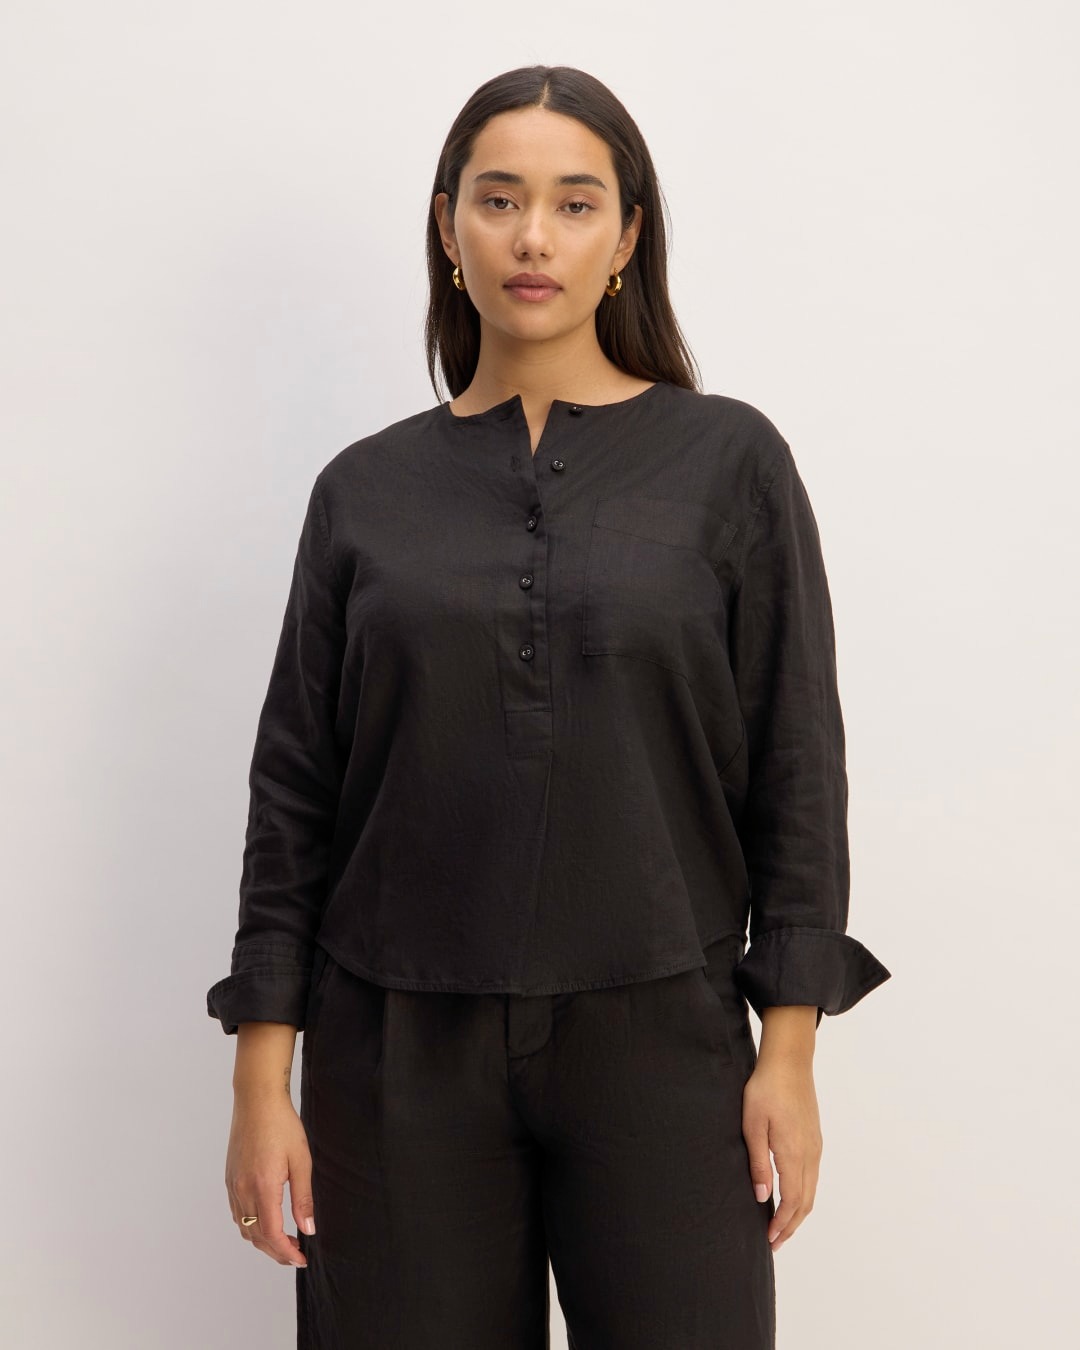 a model wears a black long-sleeve linen shirt with buttons